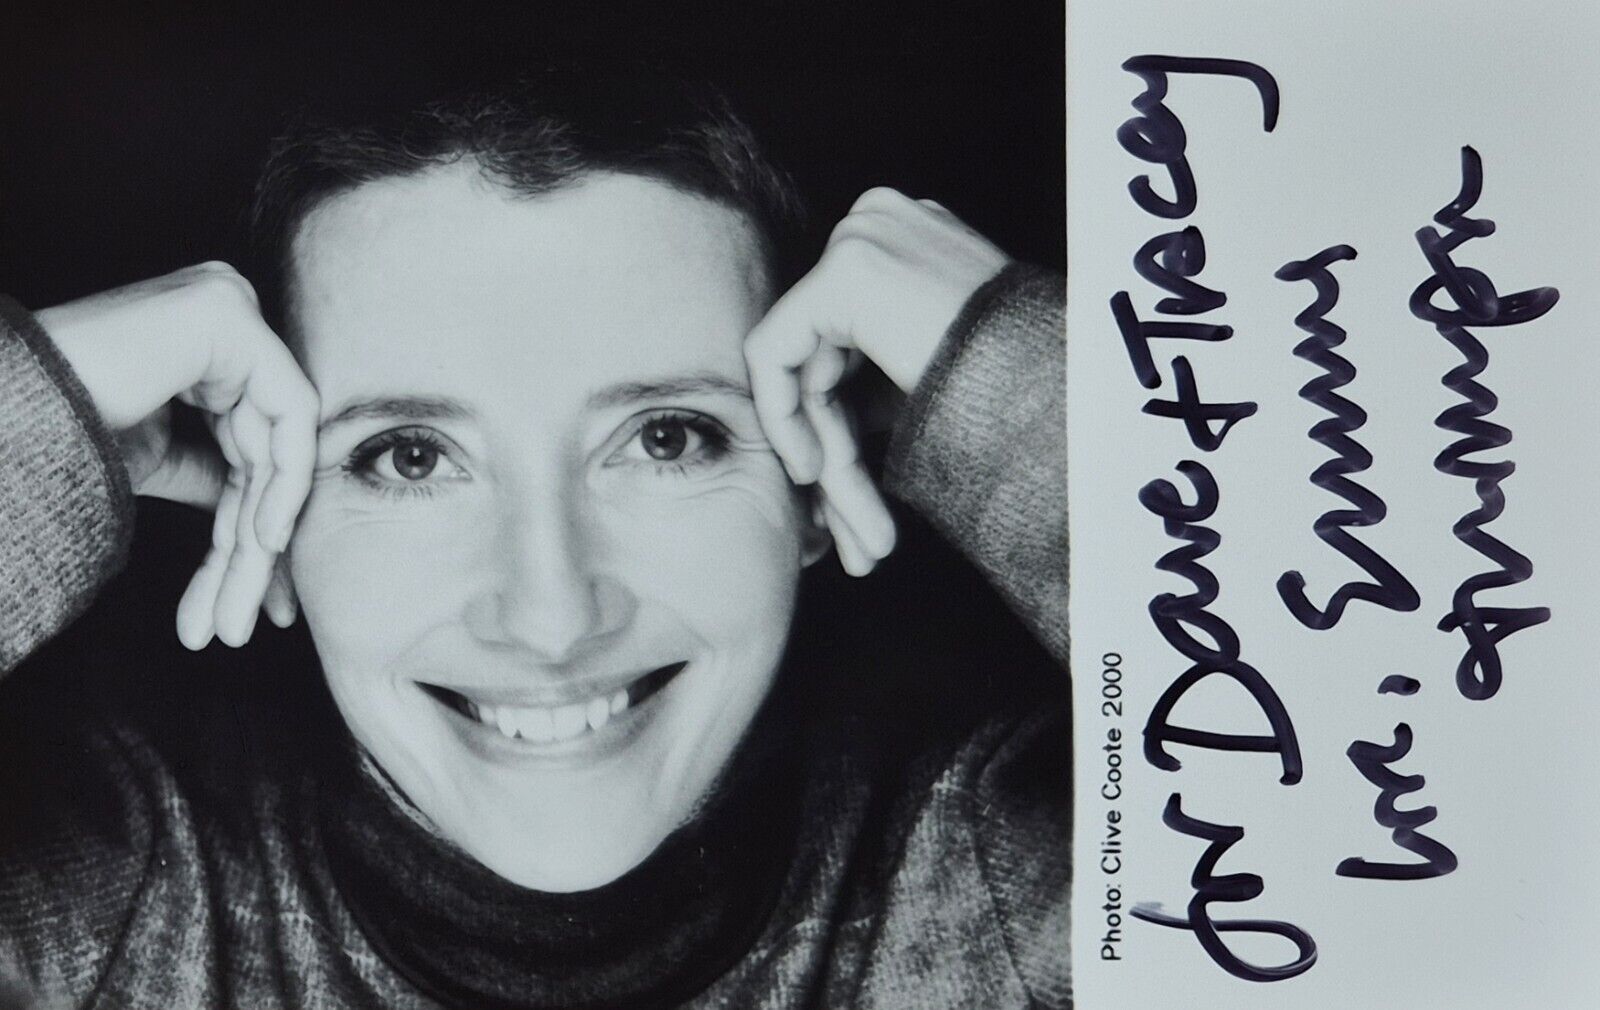 Emma Thompson Personalized original autograph  14x8.5cm